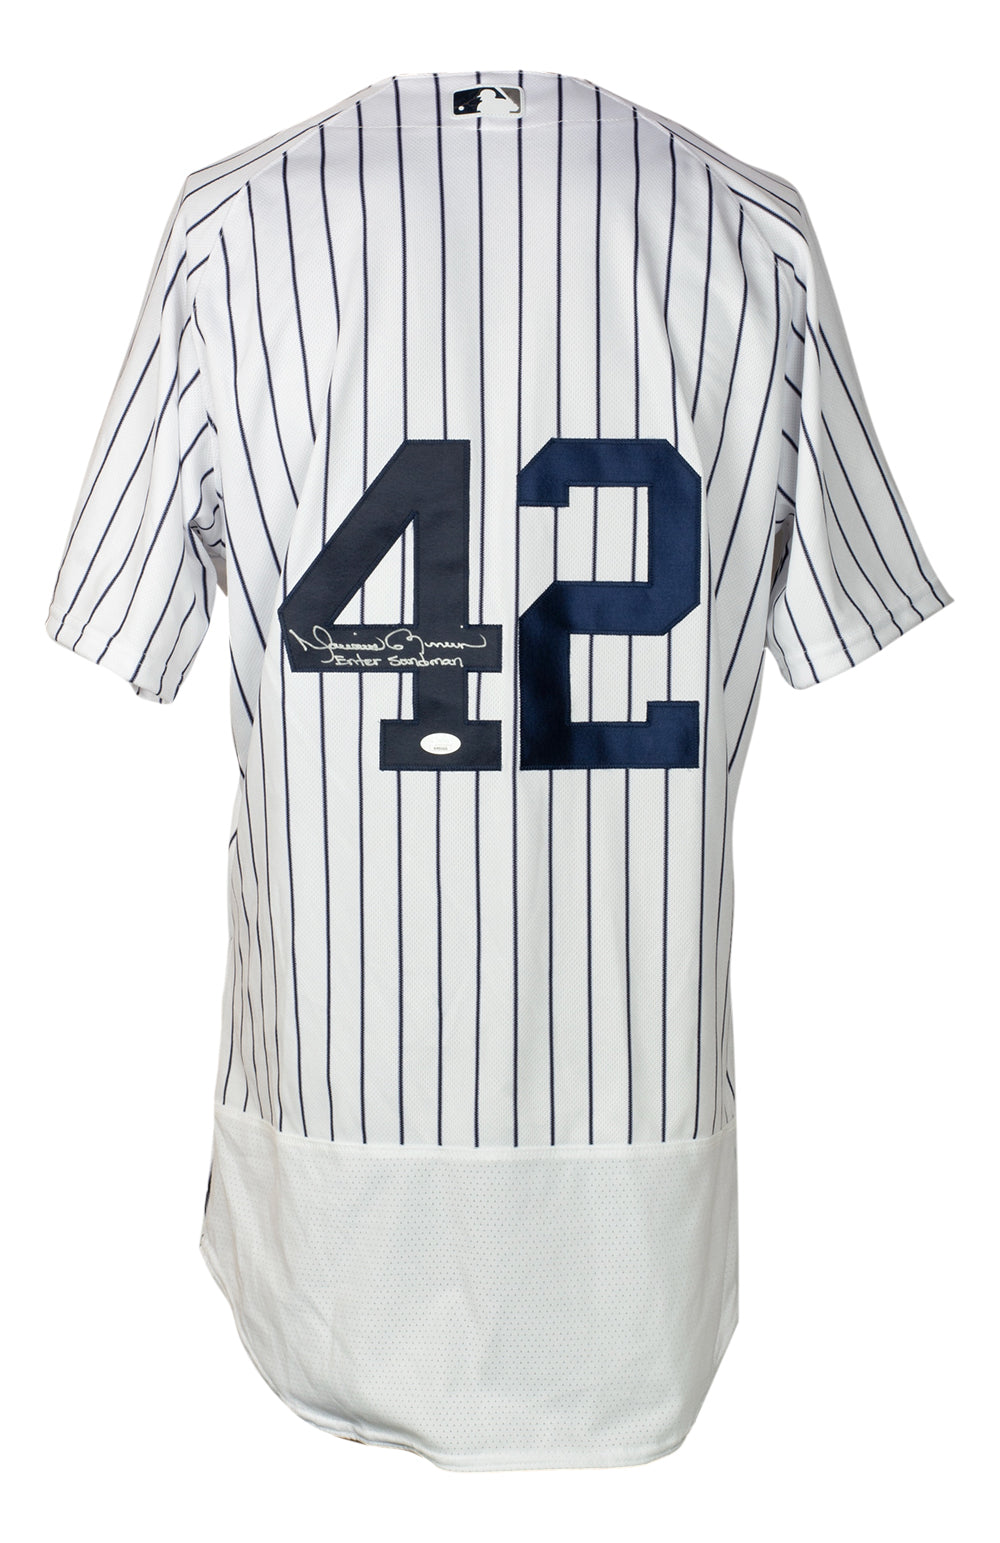 Mariano Rivera Yankees Baseball jersey #37, size 44. Made in USA